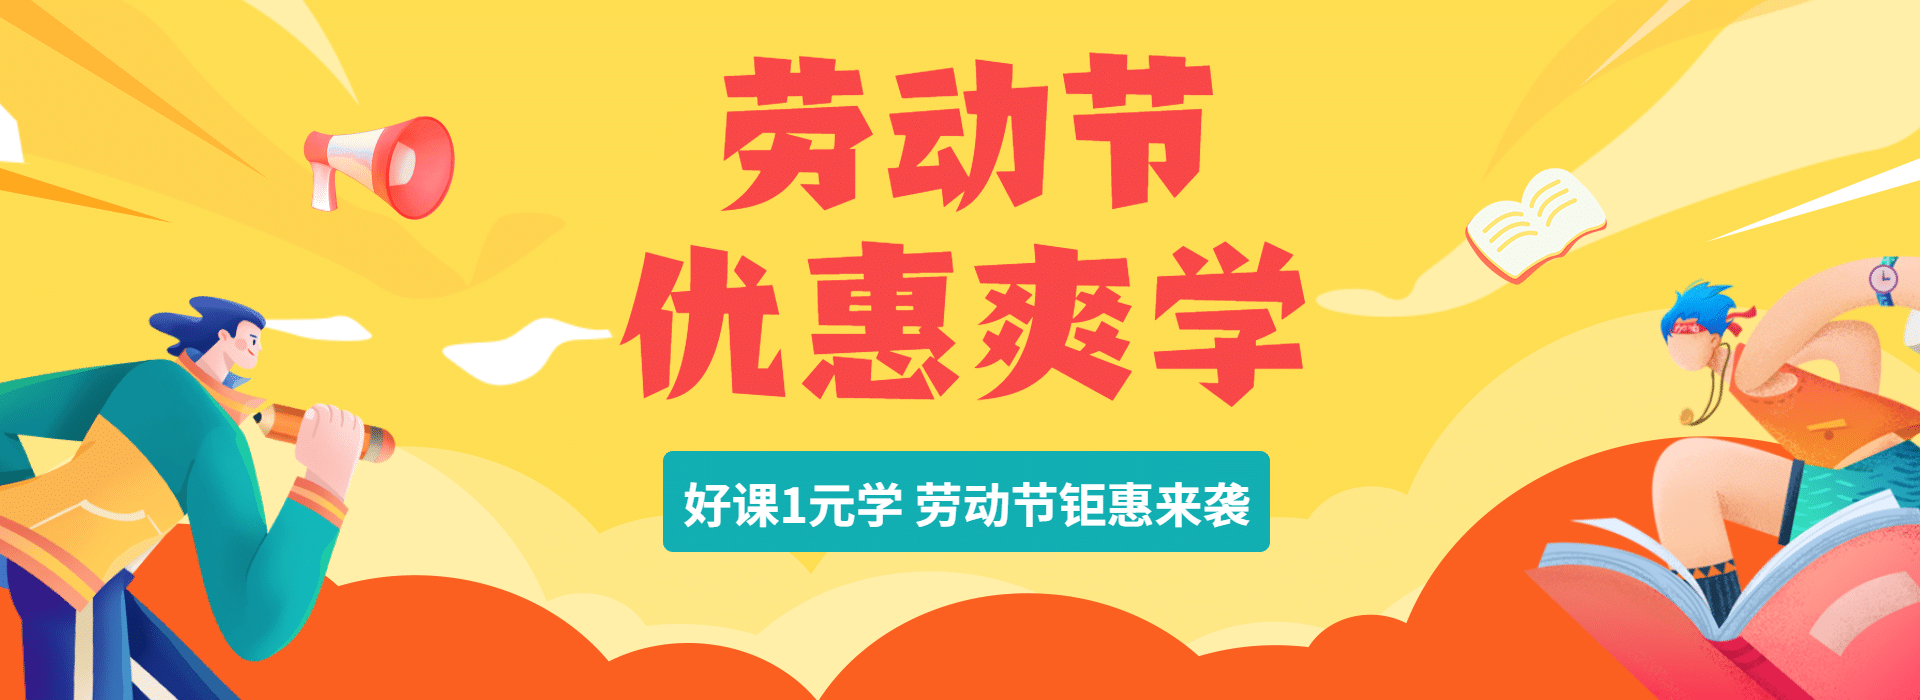 劳动节教育全屏横版海报banner